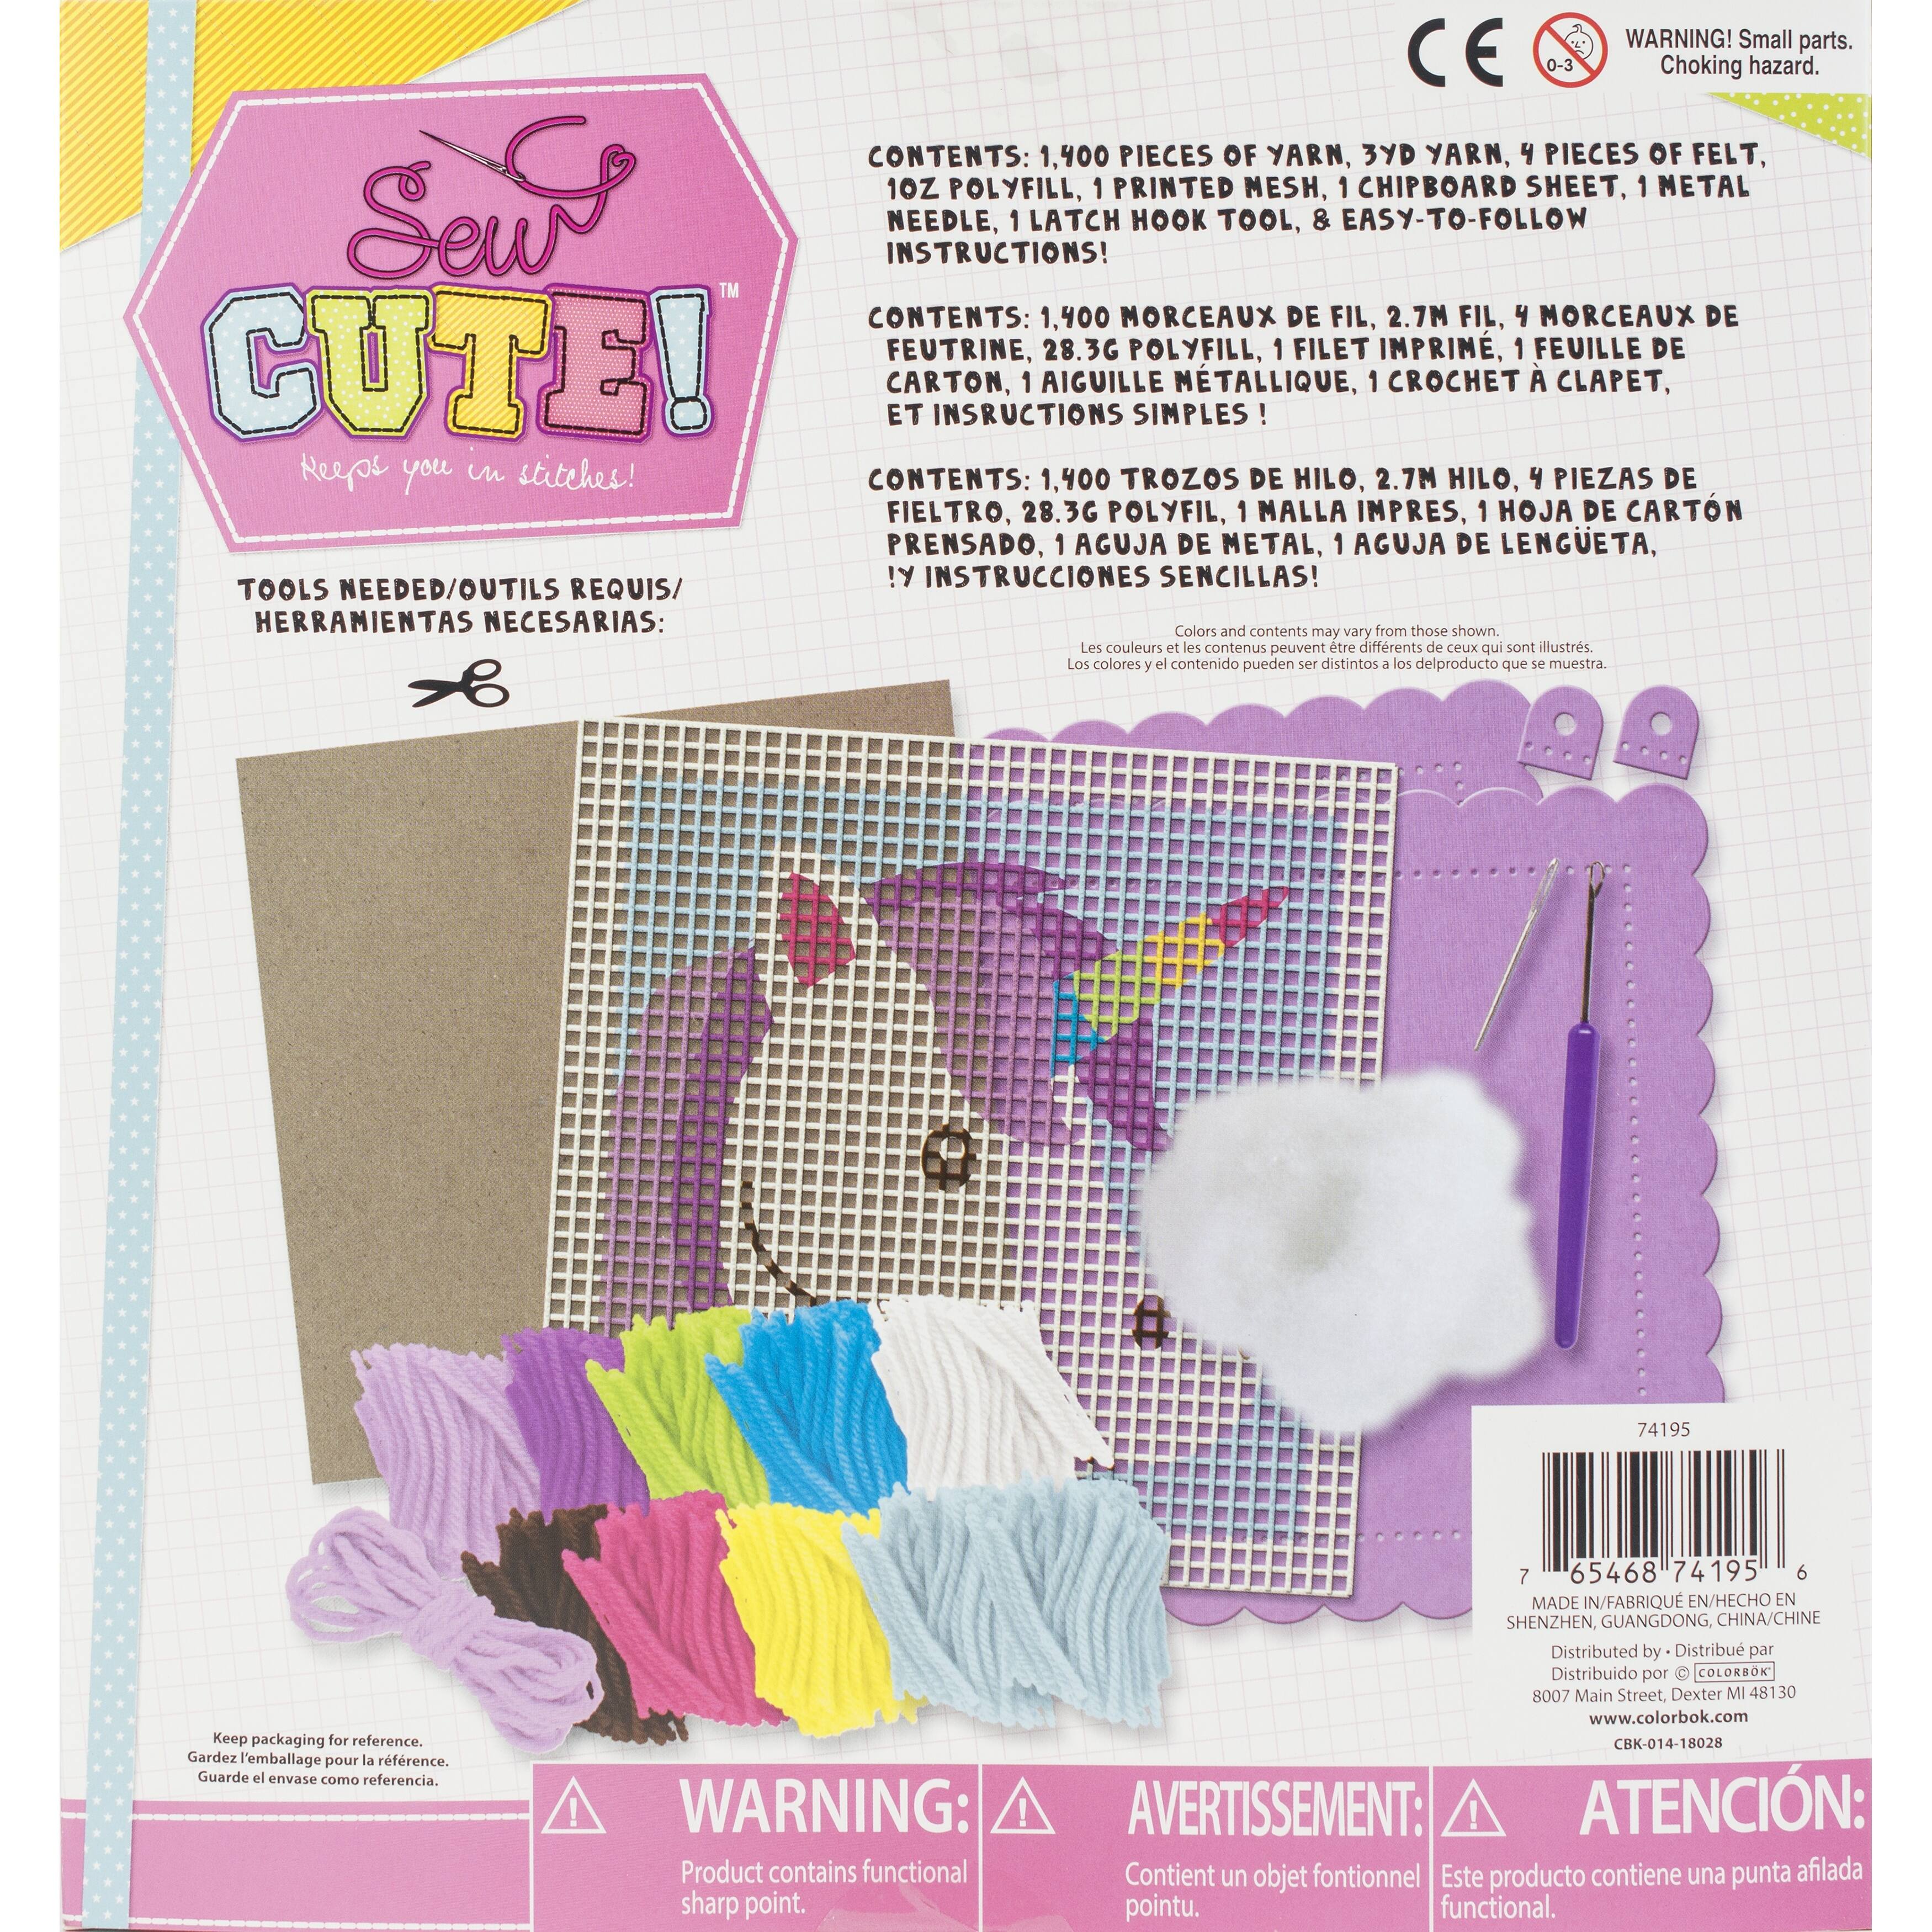 Unicorn Latch Hook Kit